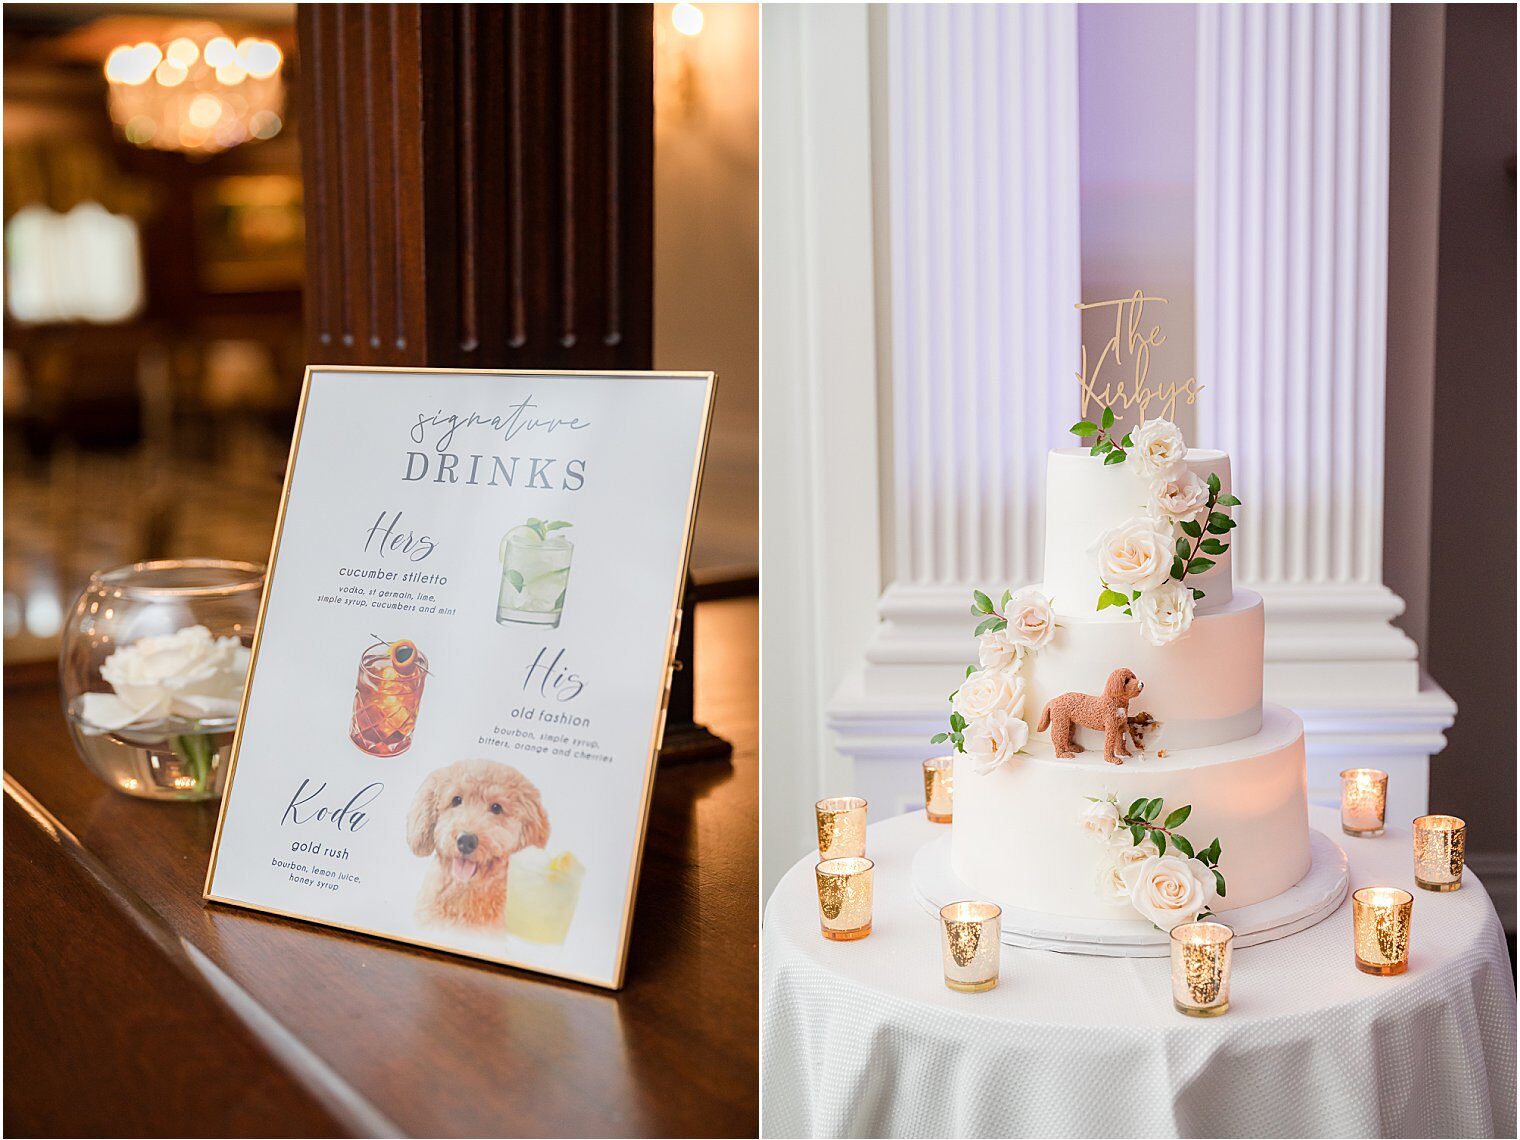 Wedding cake and drink menu 